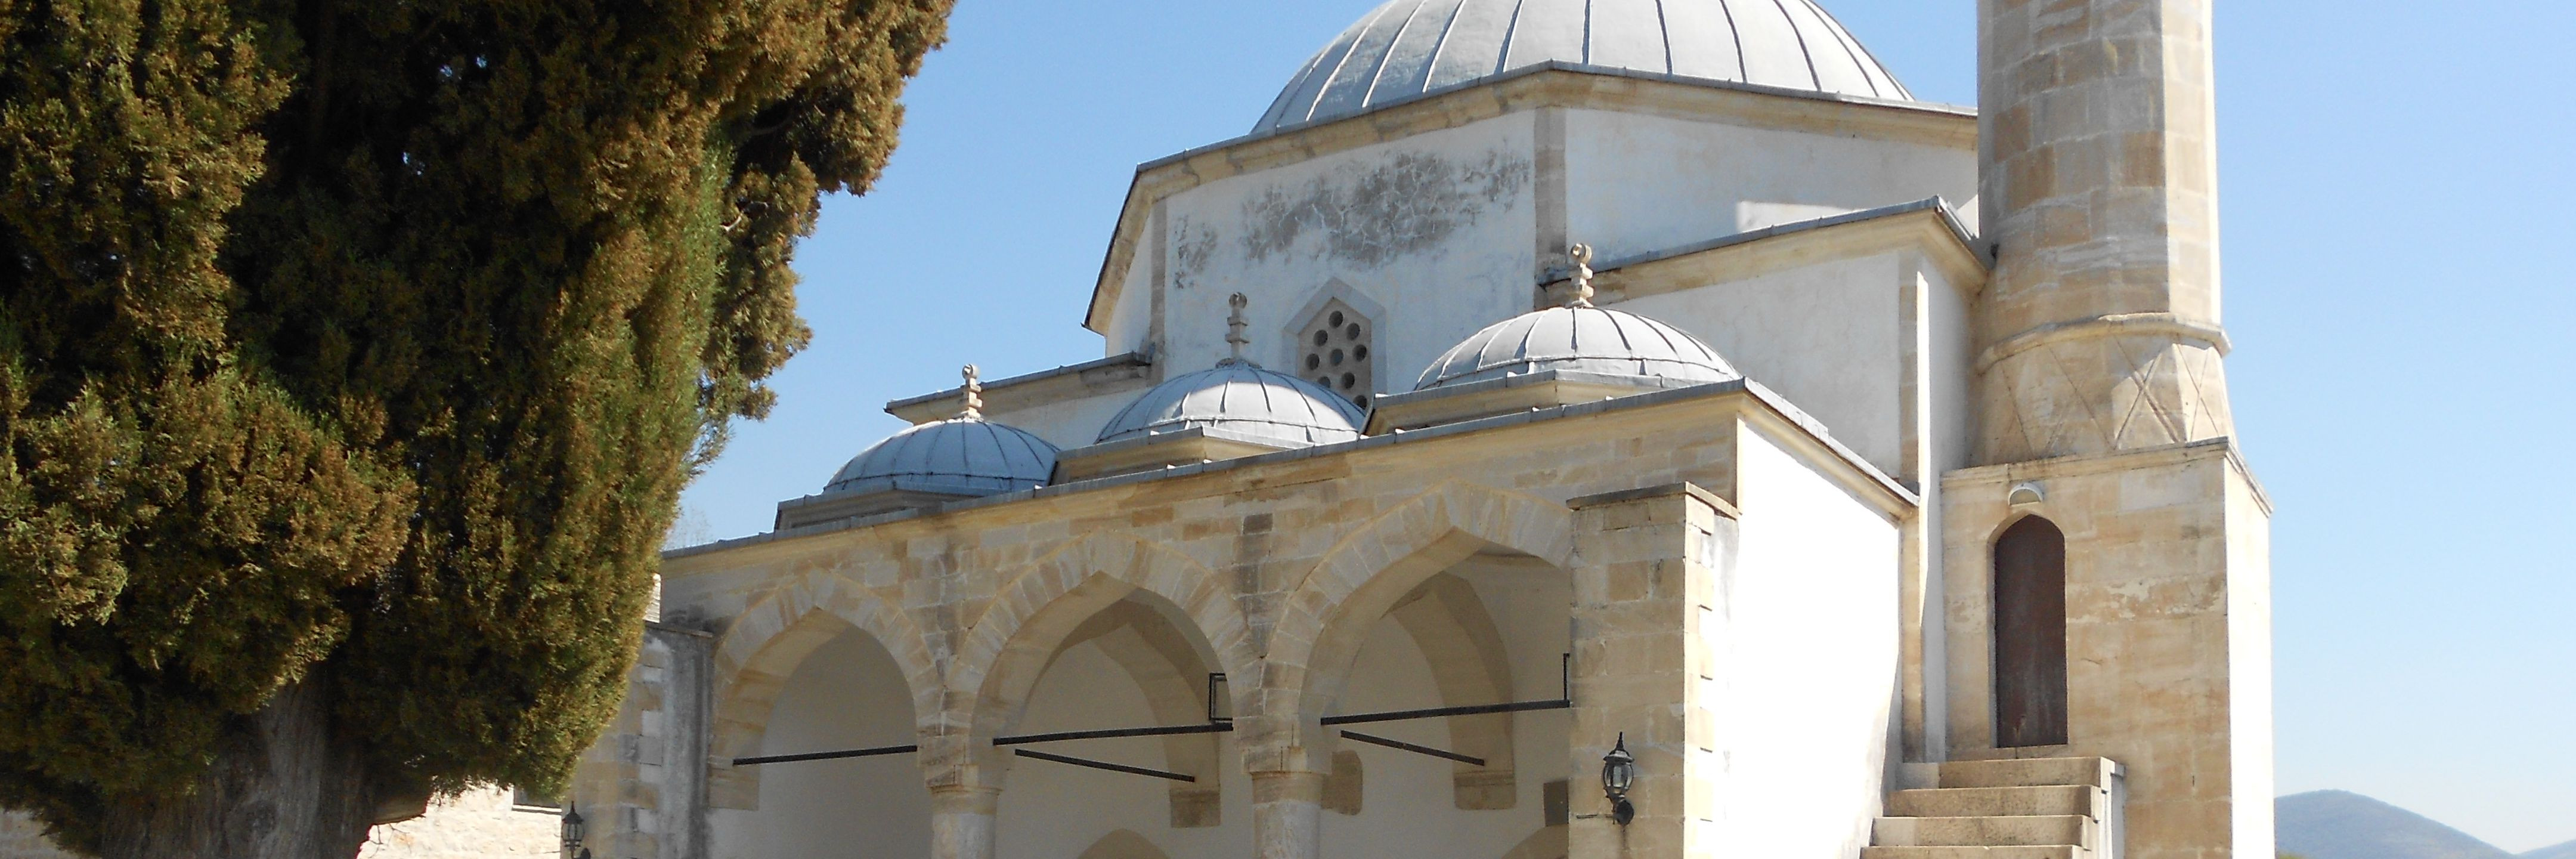 Мечеть Али-паши Ризванбеговича. Фото: Елена Арсениевич, CC BY-SA 3.0